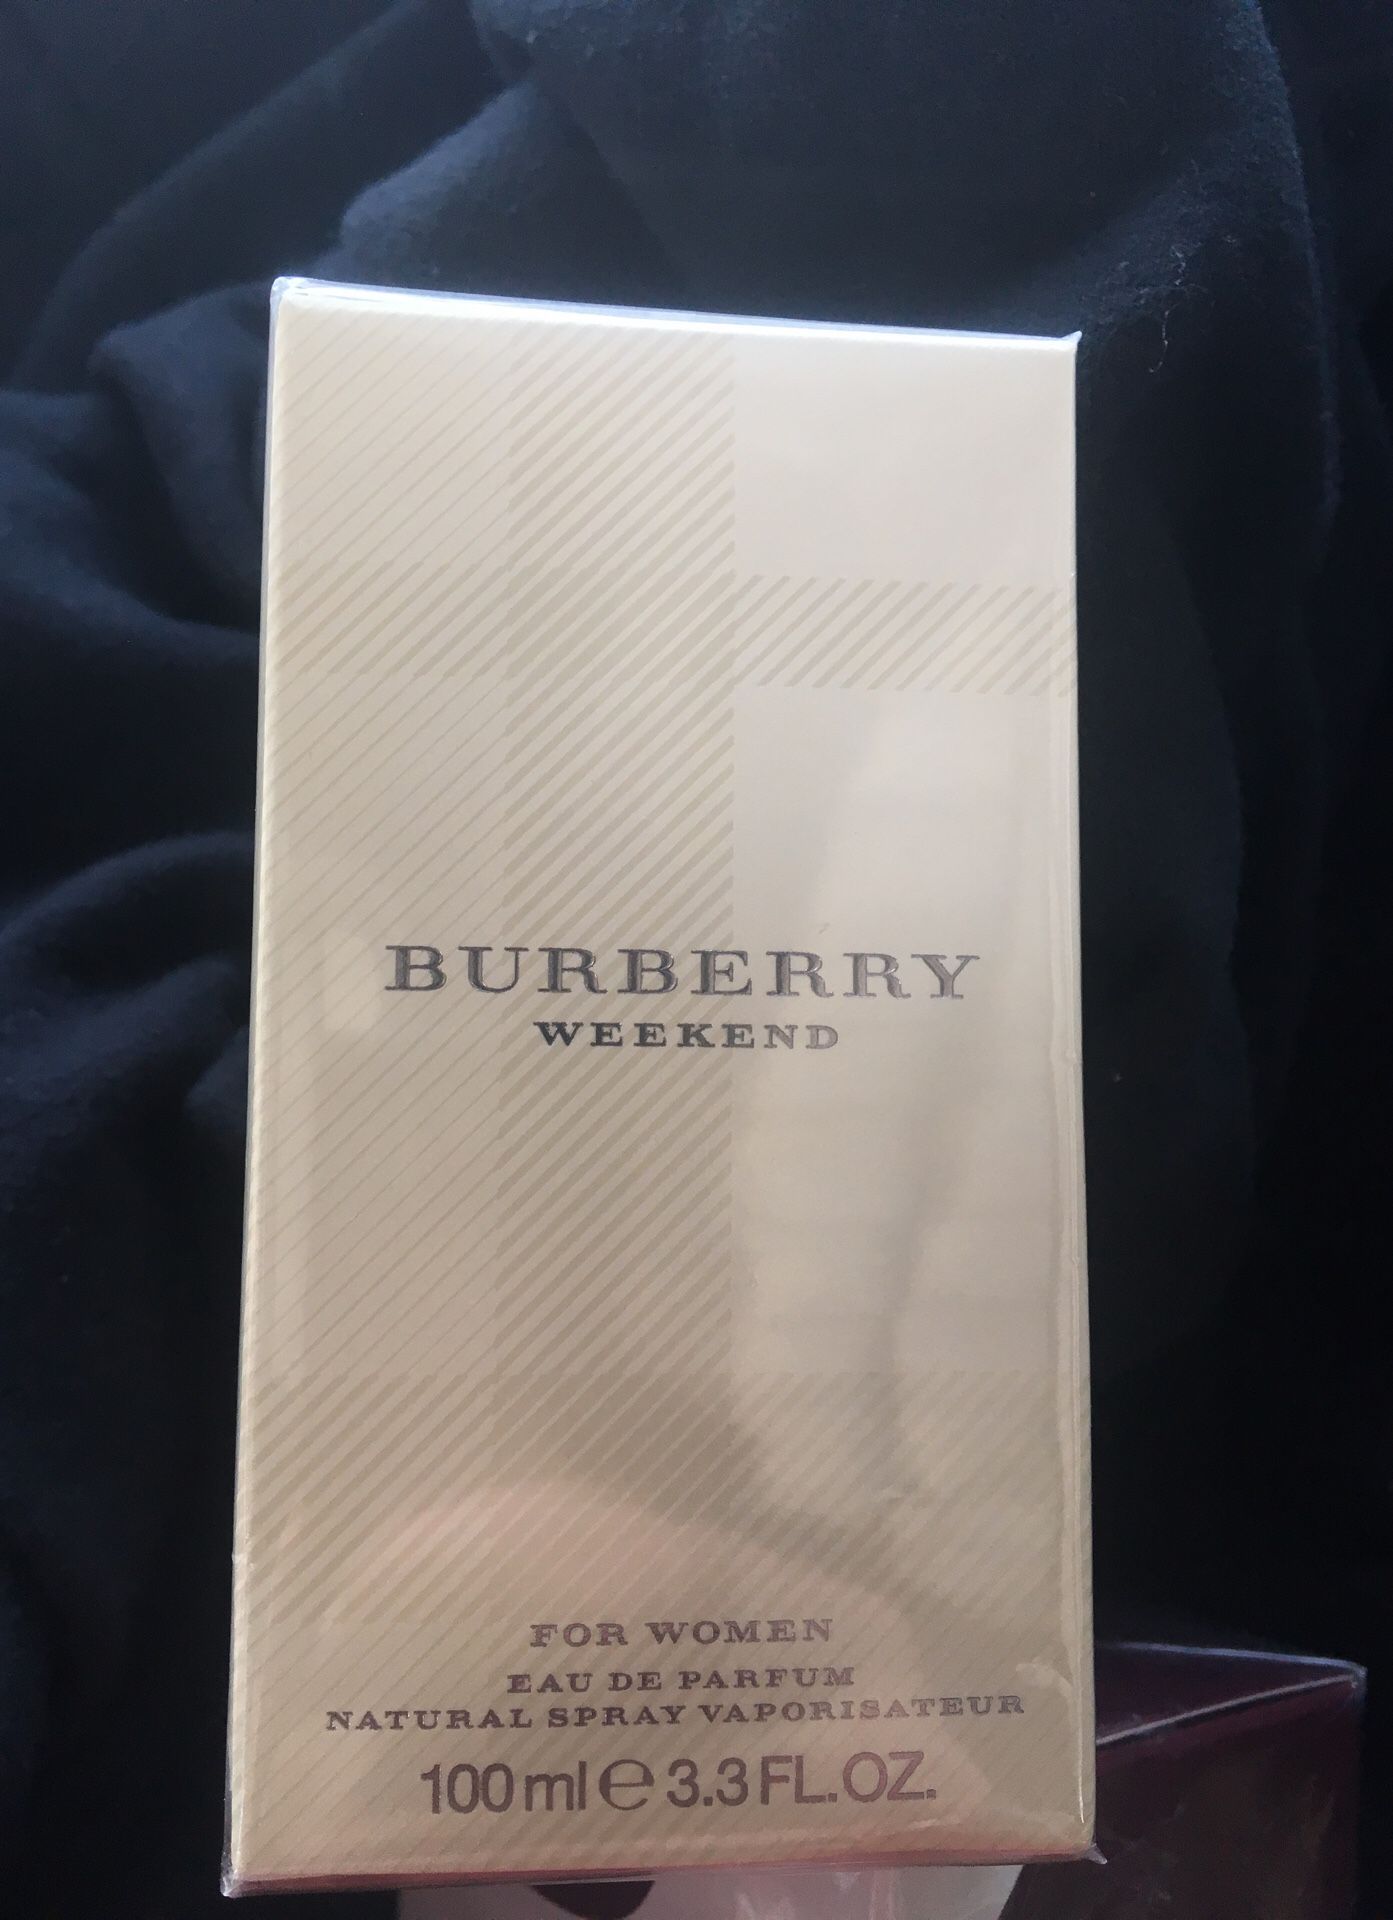 Burberry weekend perfume $40